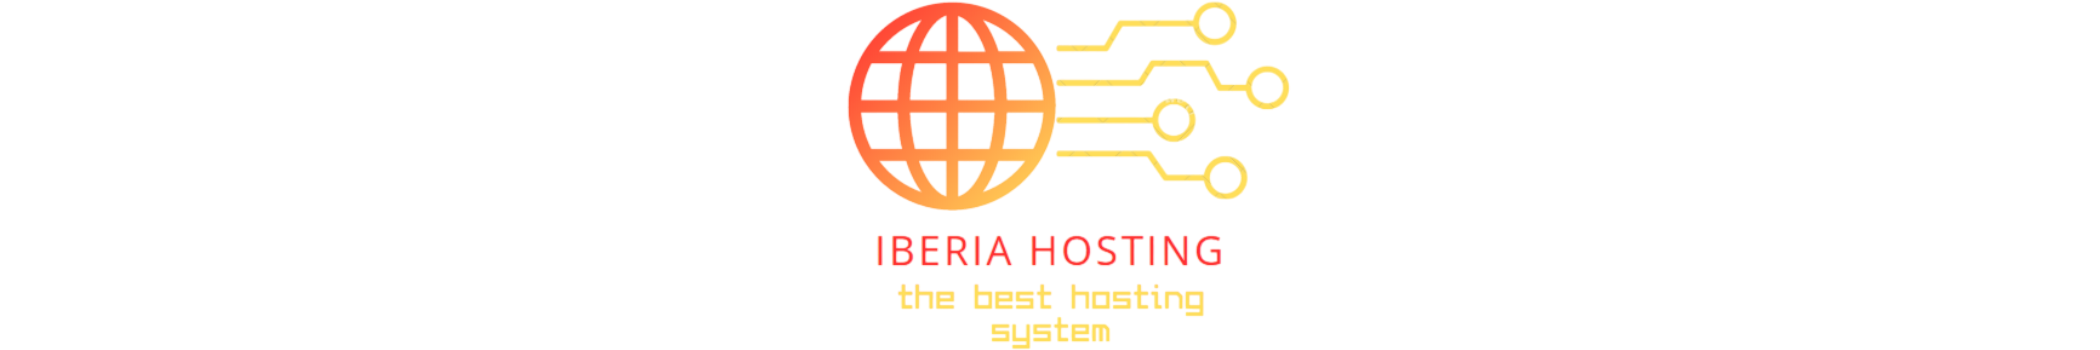 Logo iberiahosting